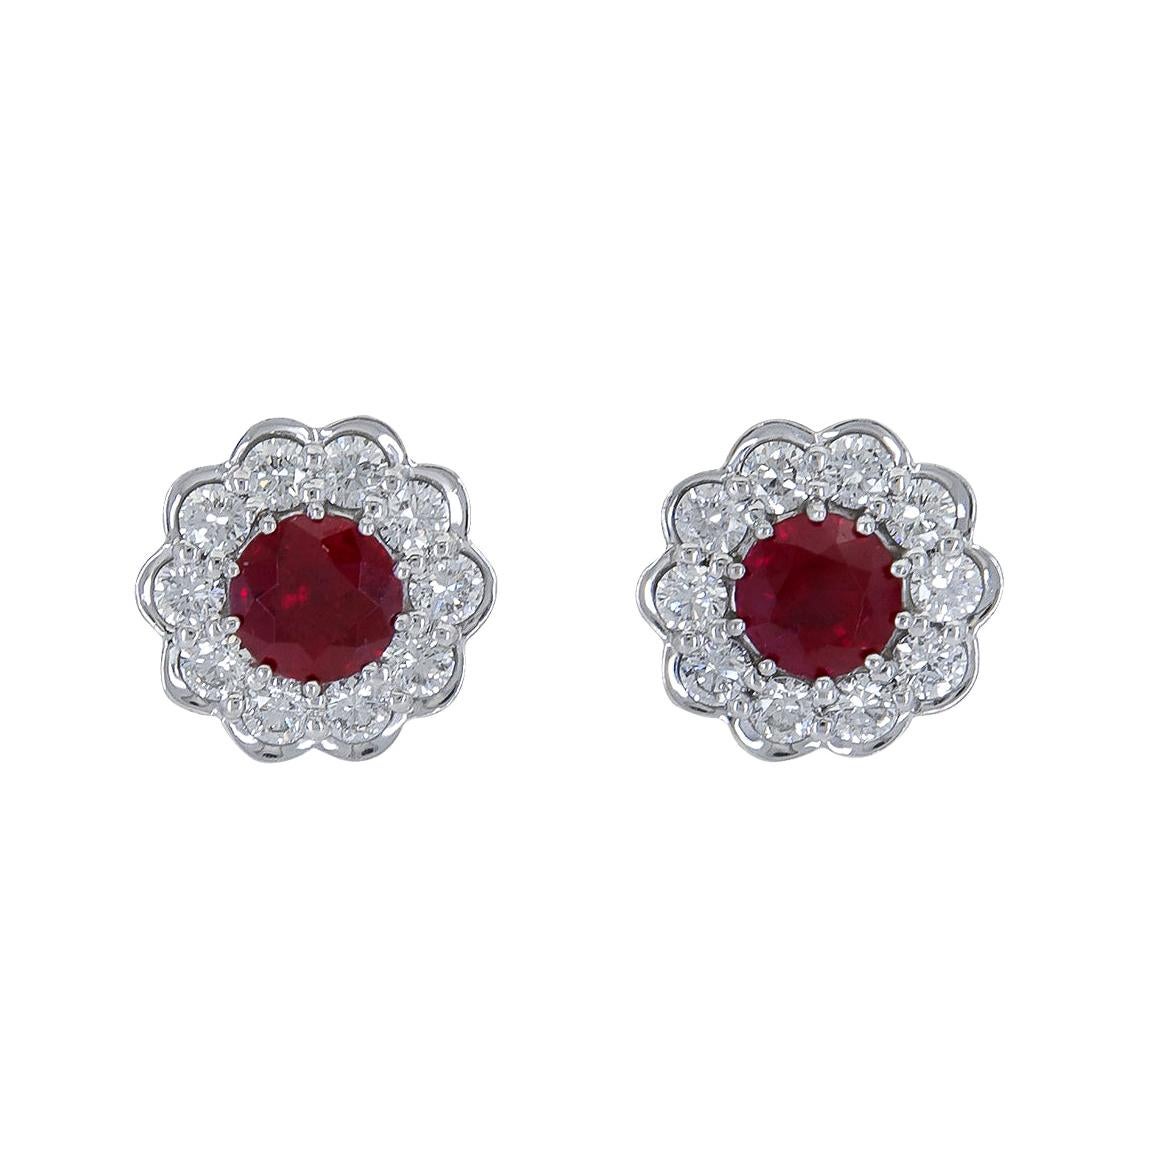 2.20 Carat Round Ruby and Diamond Flower Stud Earrings